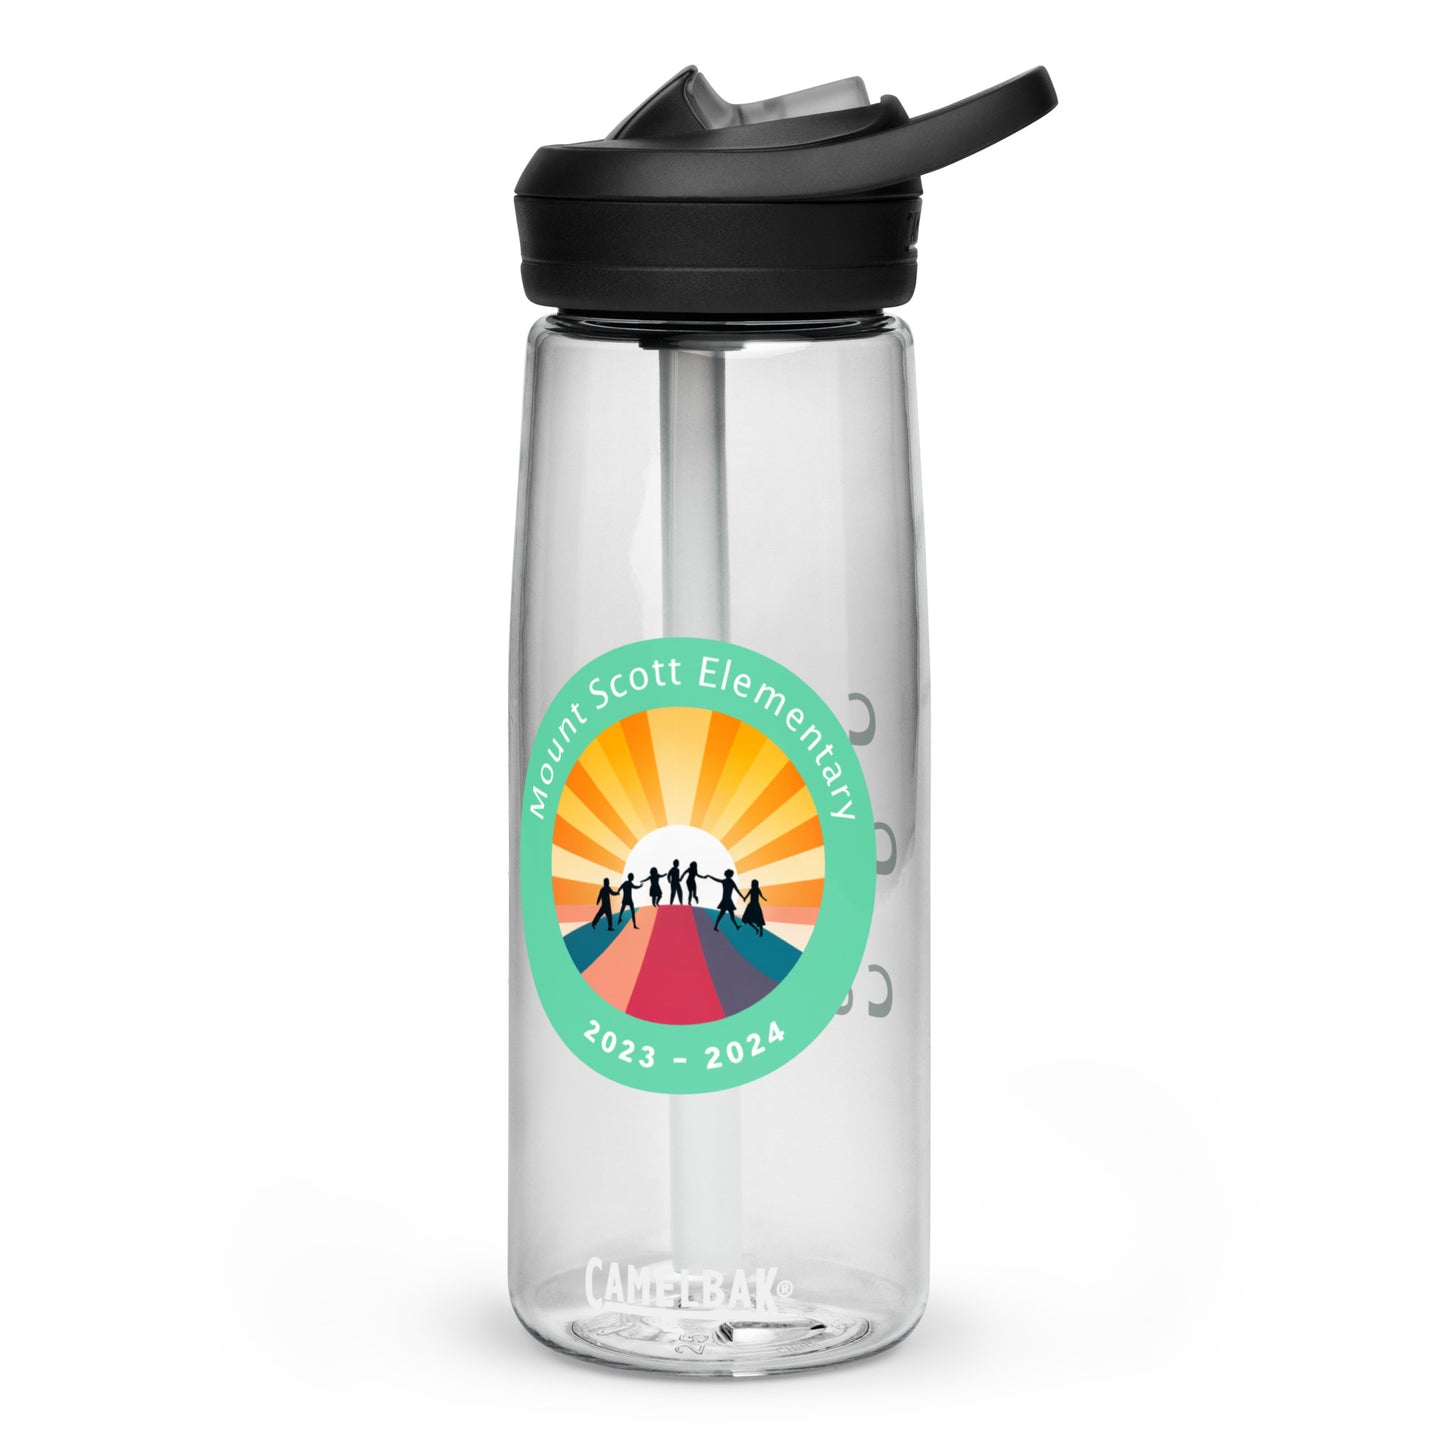 Sports water bottle Mt. Scott Celebrate Community Connection